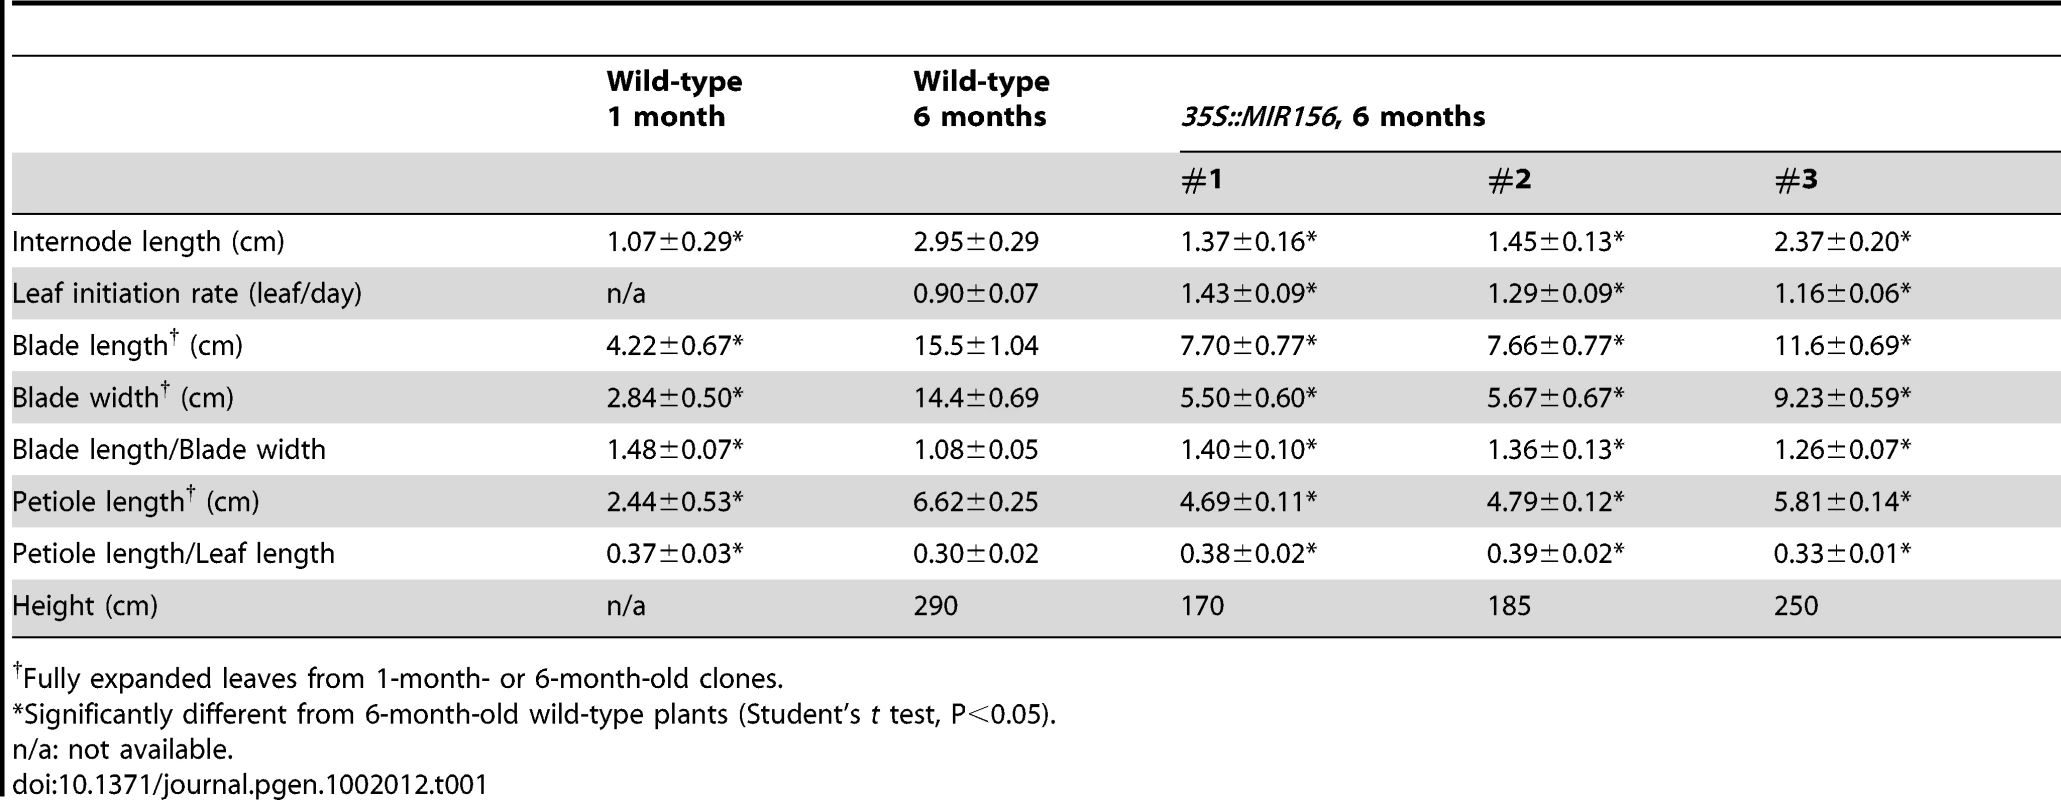 Growth characteristics of <i>35S::MIR156 P. x canadensis</i> plants.